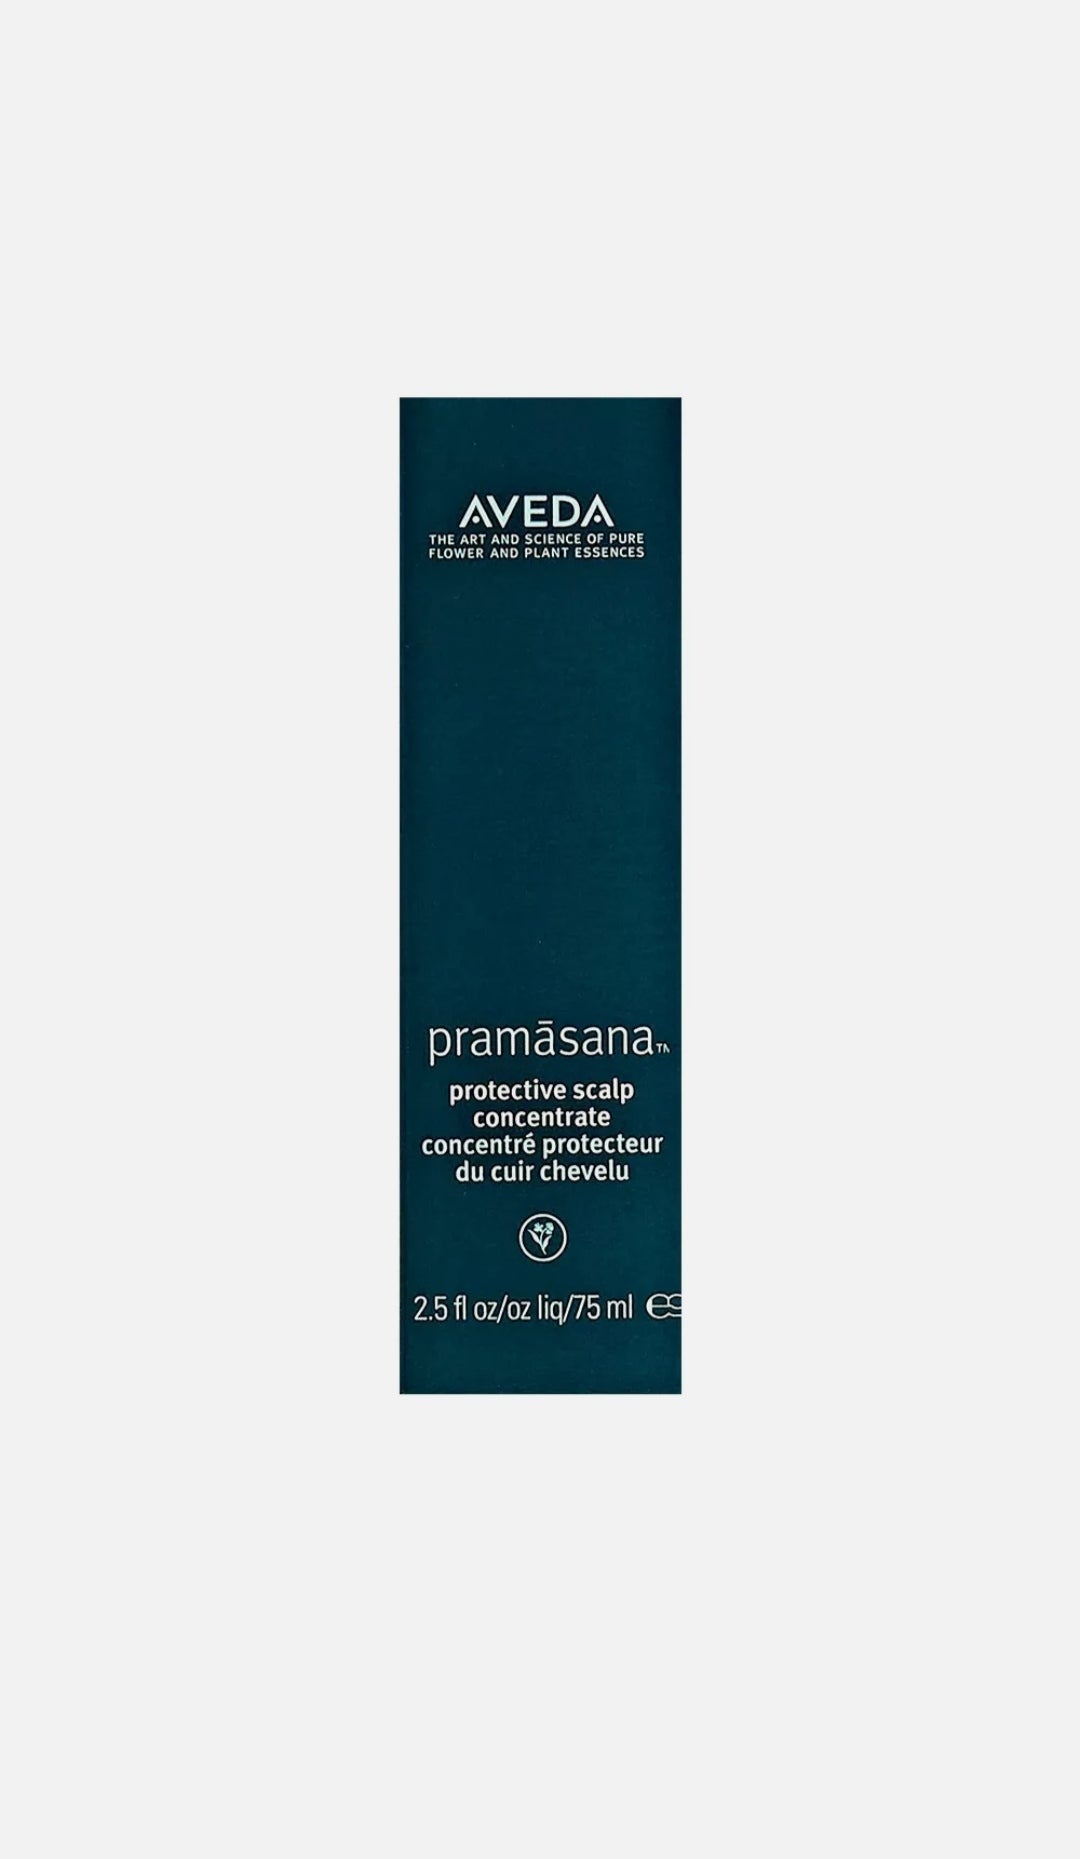 Aveda Pramasana protective scalp concentrate